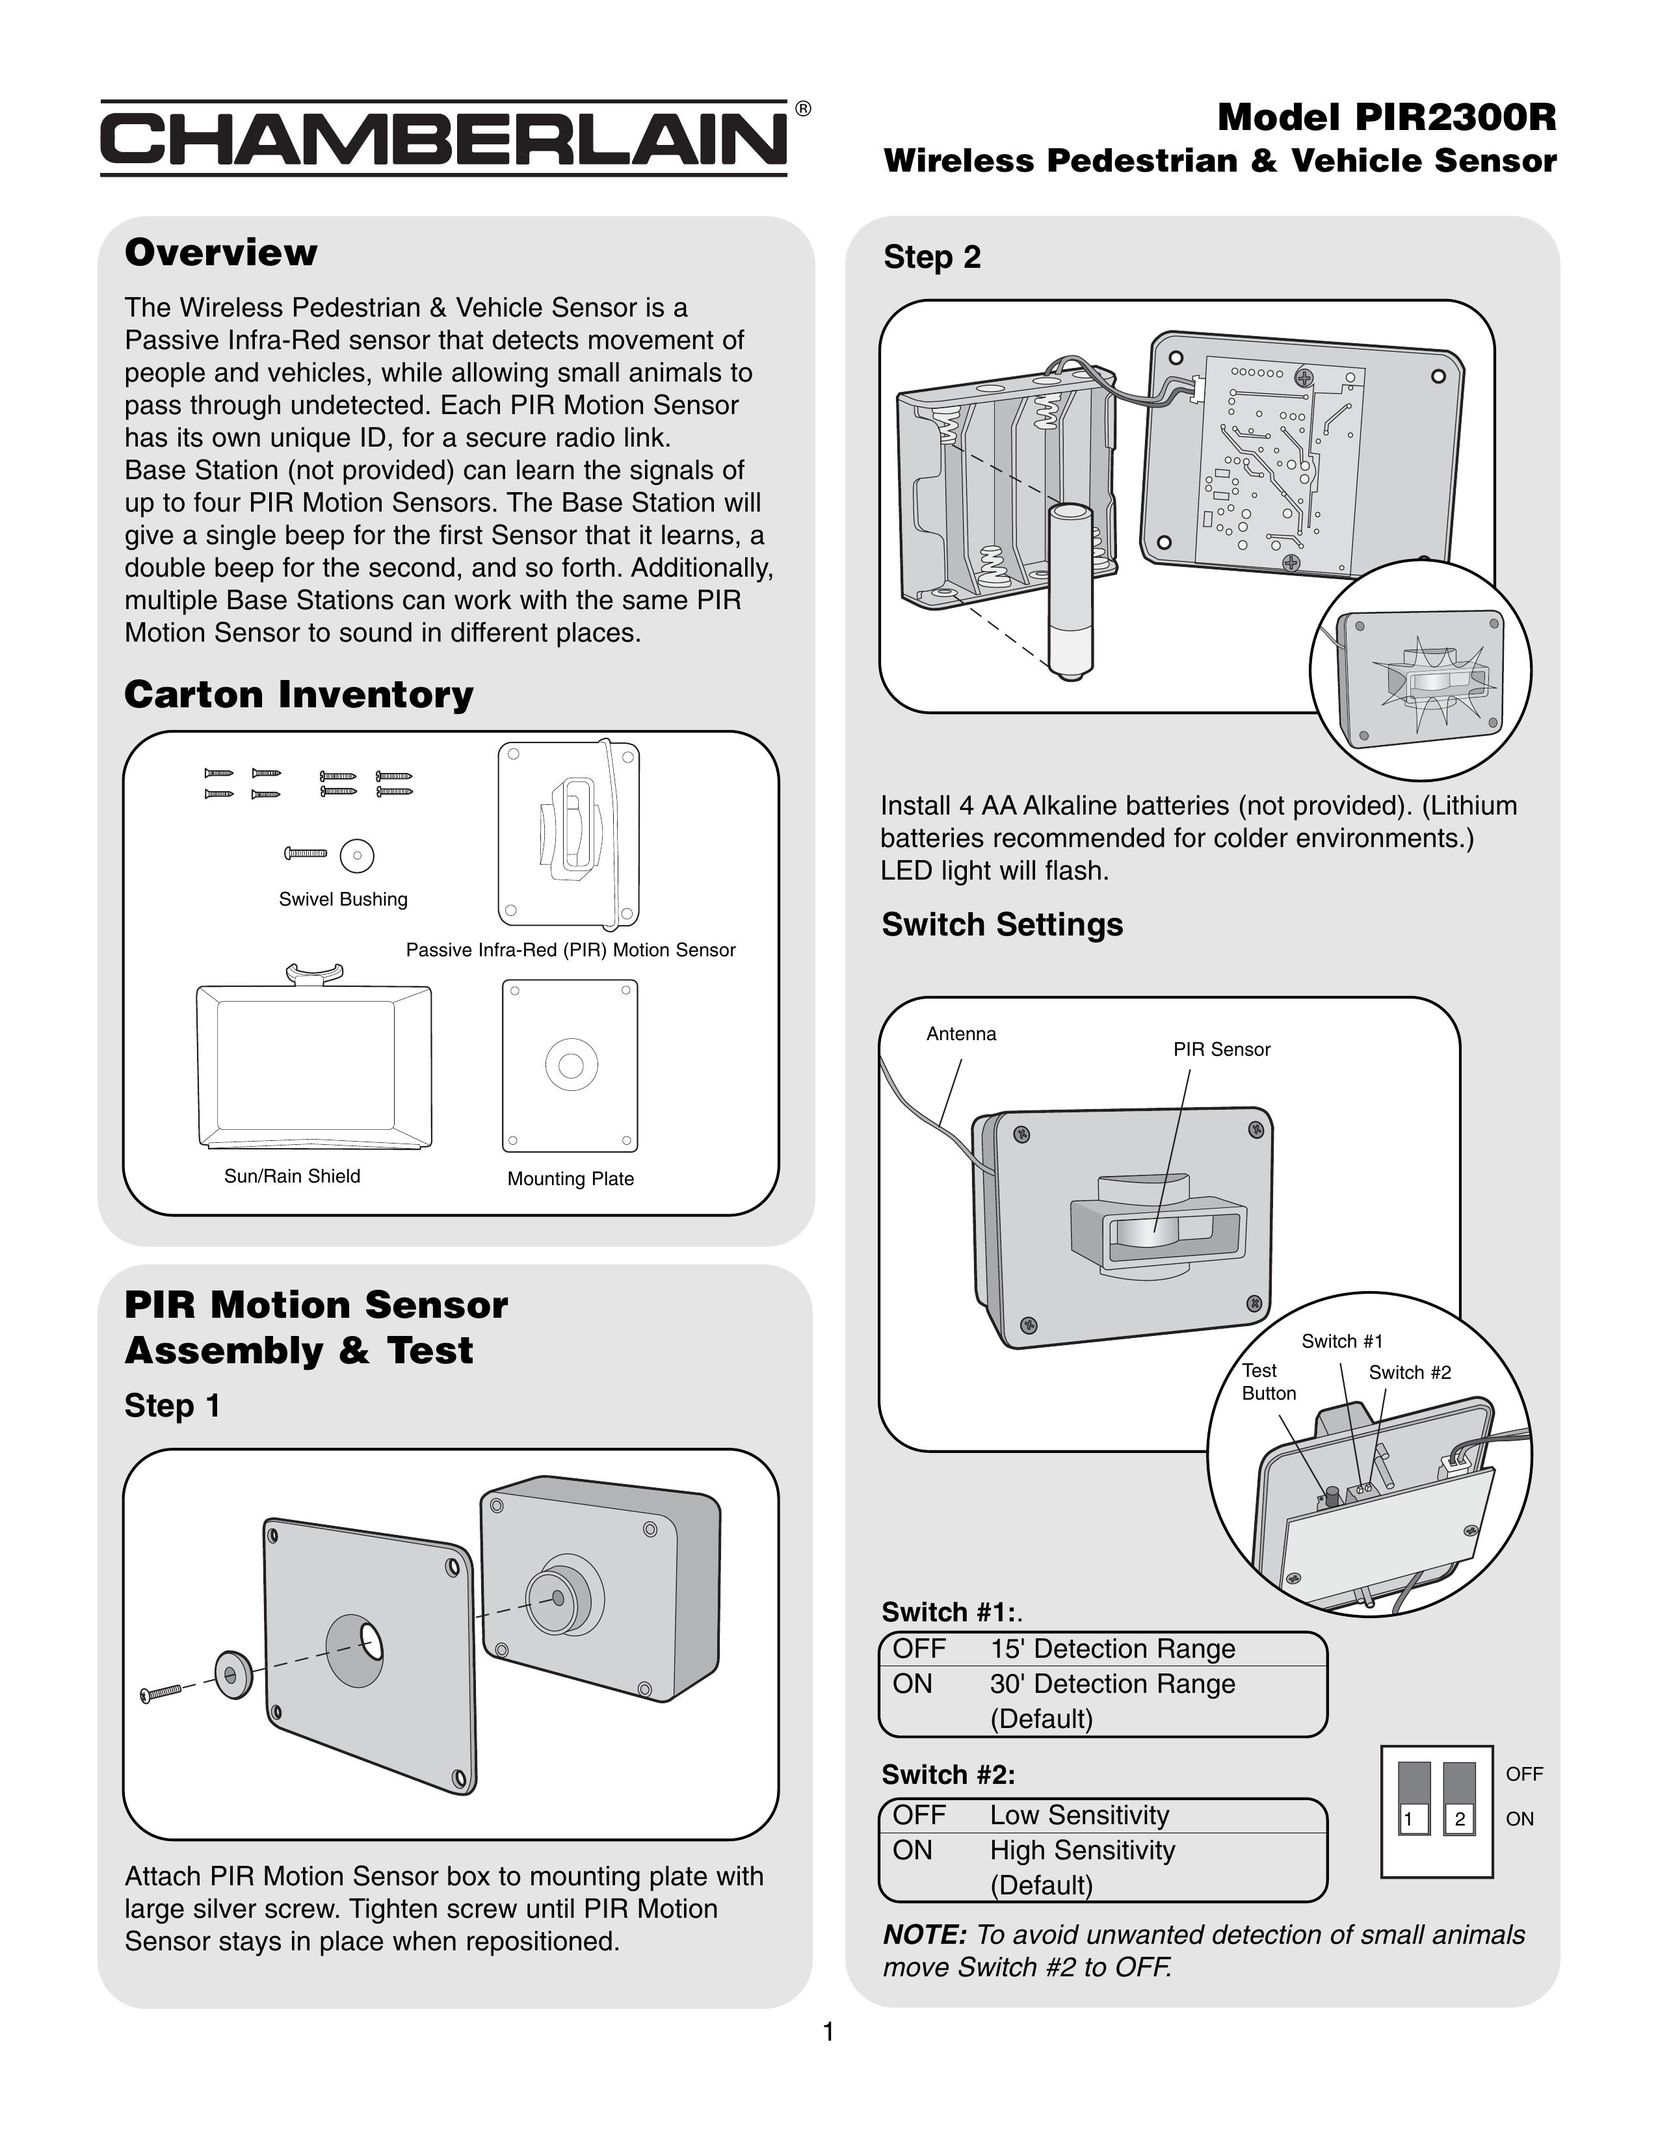 Chamberlain PIR2300R Stud Sensor User Manual